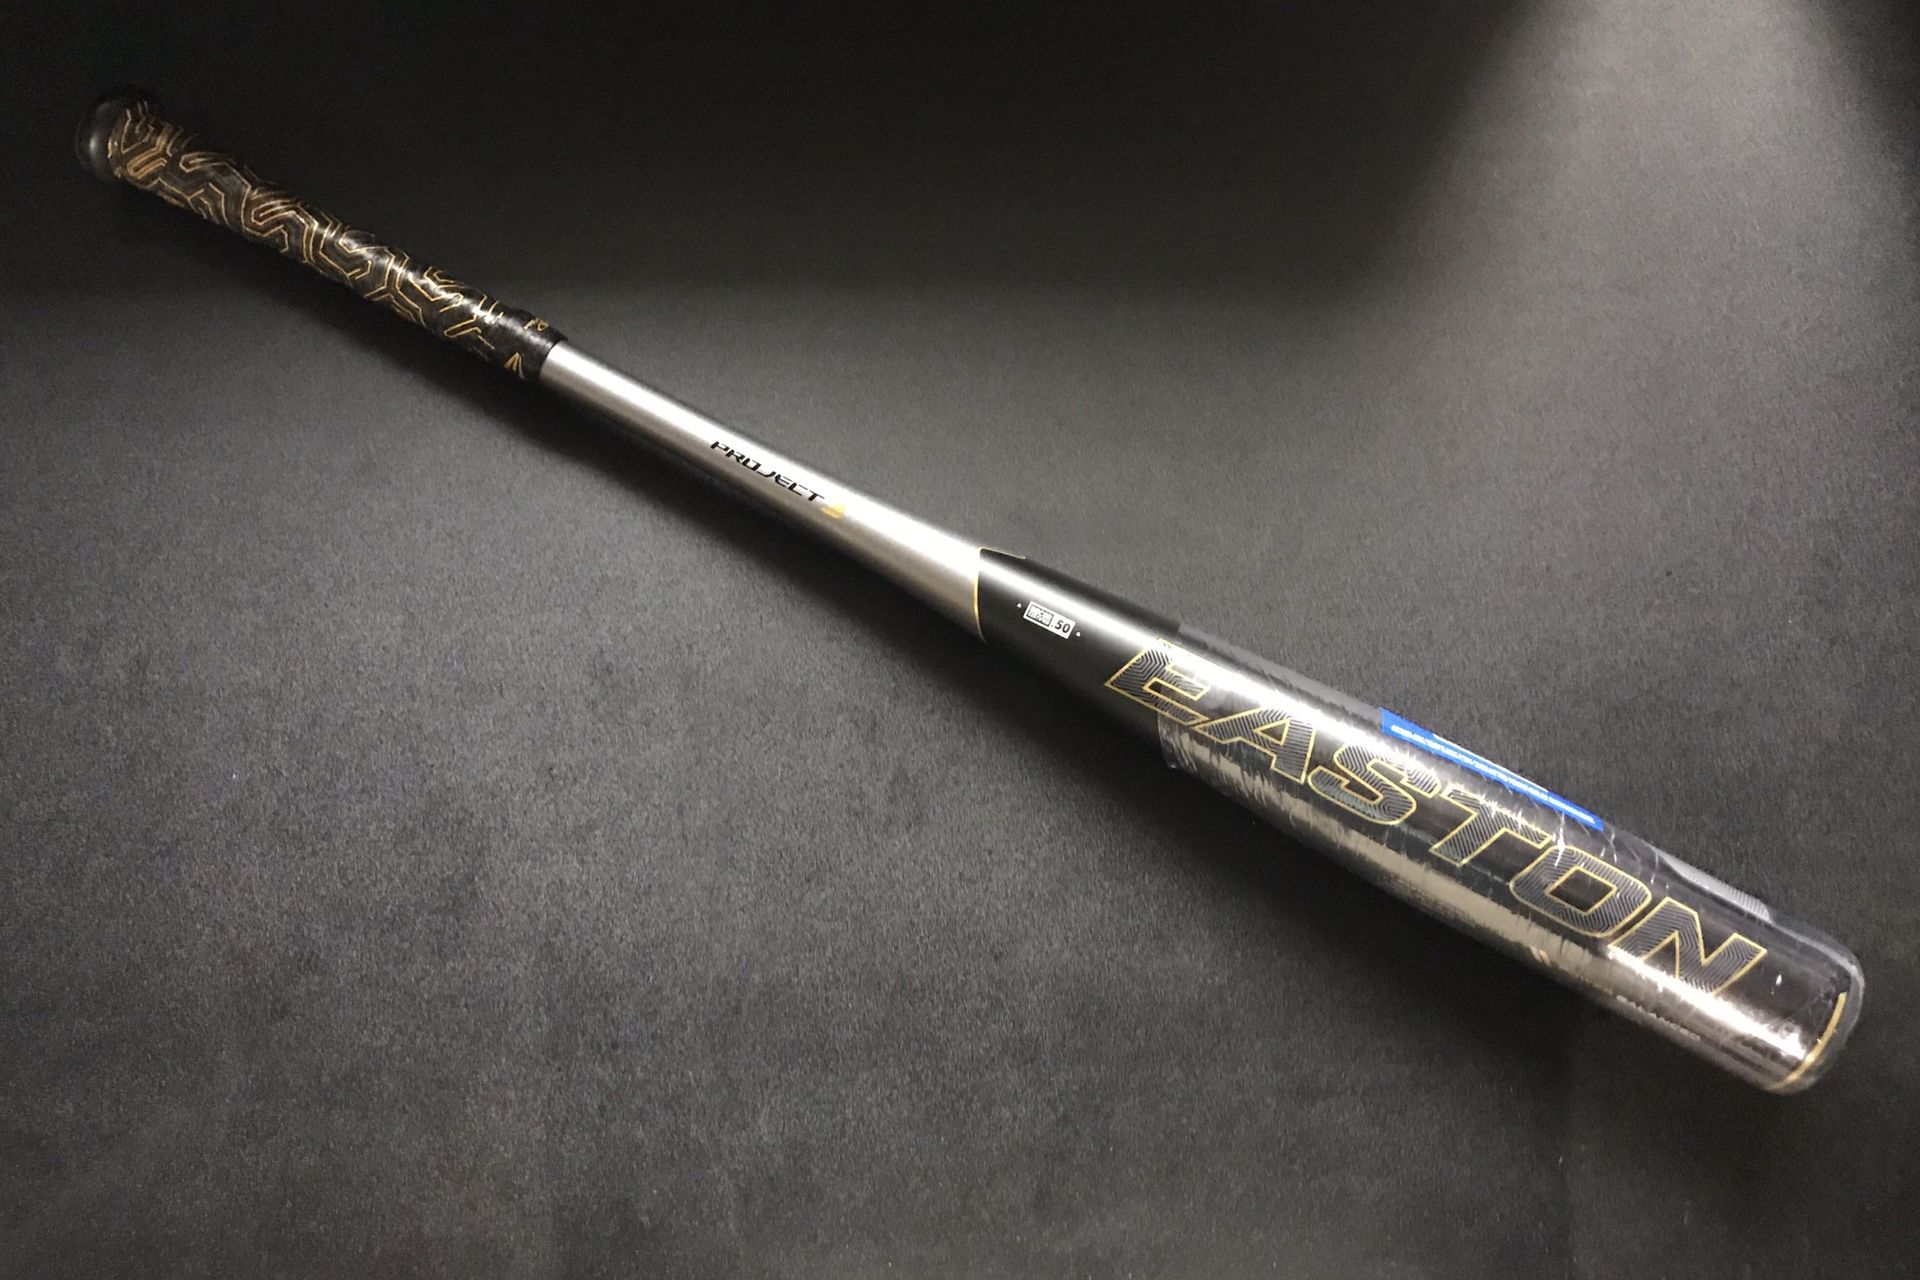 New 2019 Easton BB19AL Project 3 ALPHA -3 BBCOR Baseball Bat